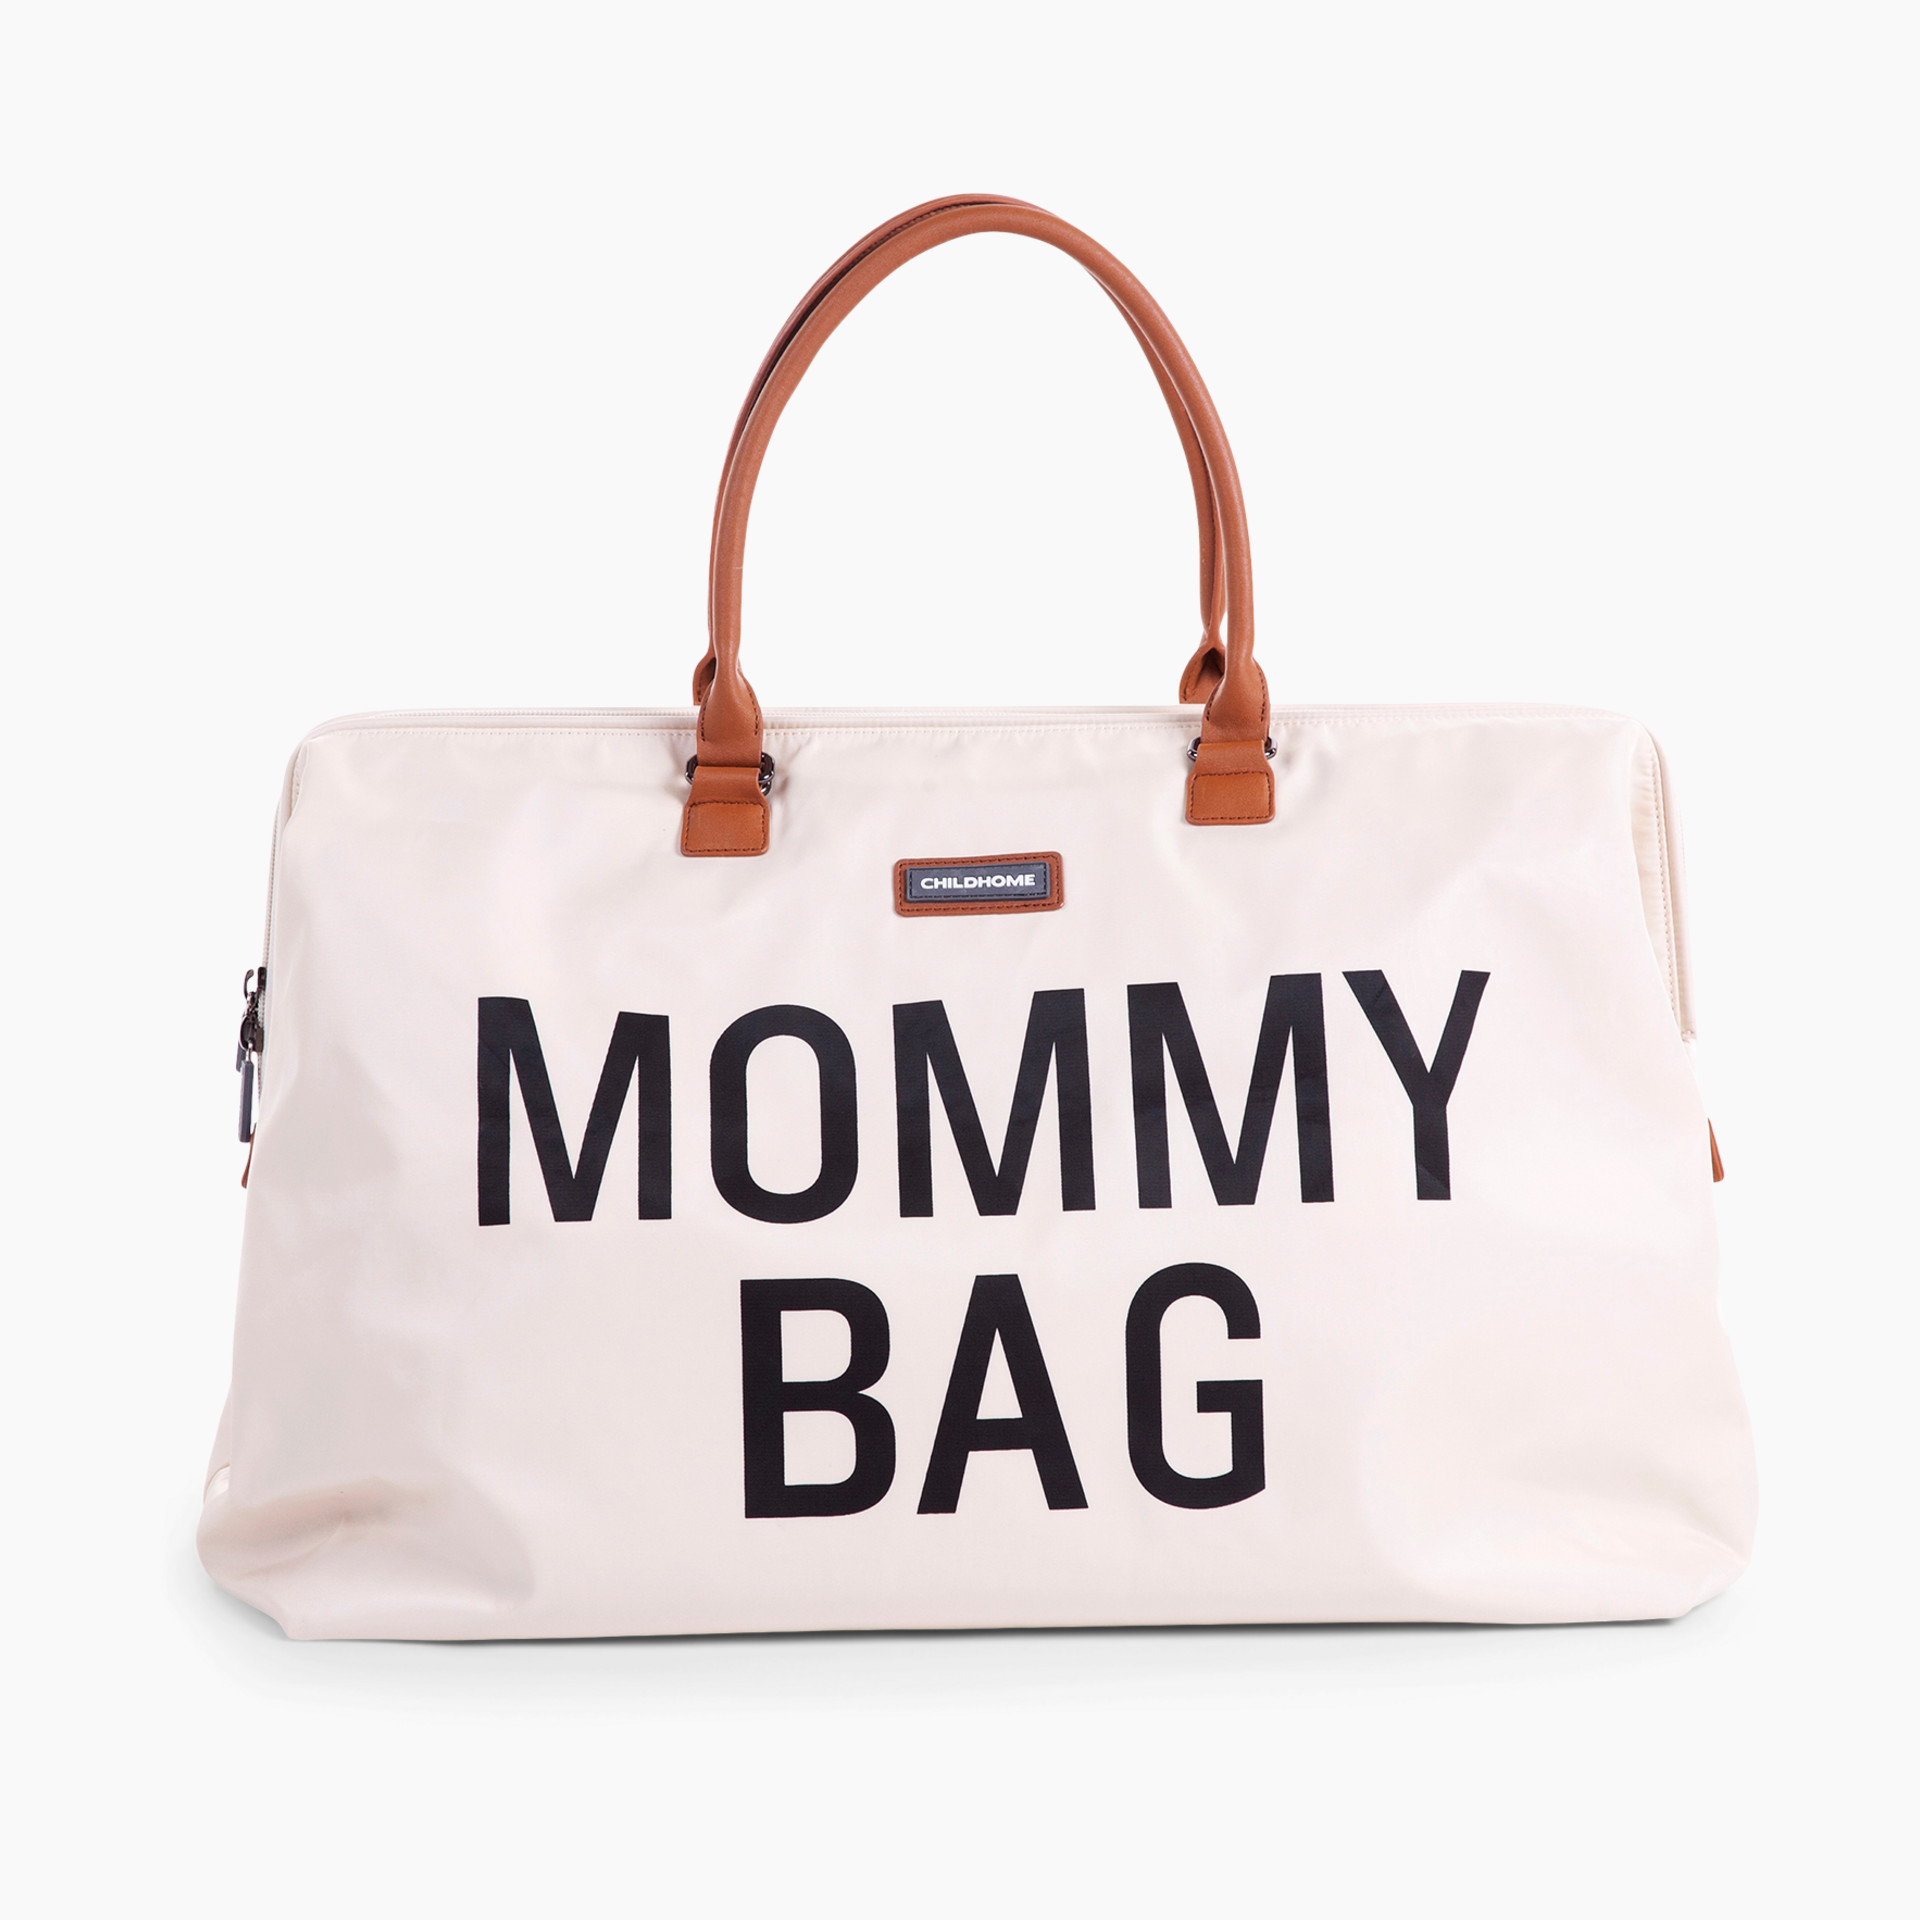 Childhome Mommy Bag, XL Diaper Bag - Off White & Black